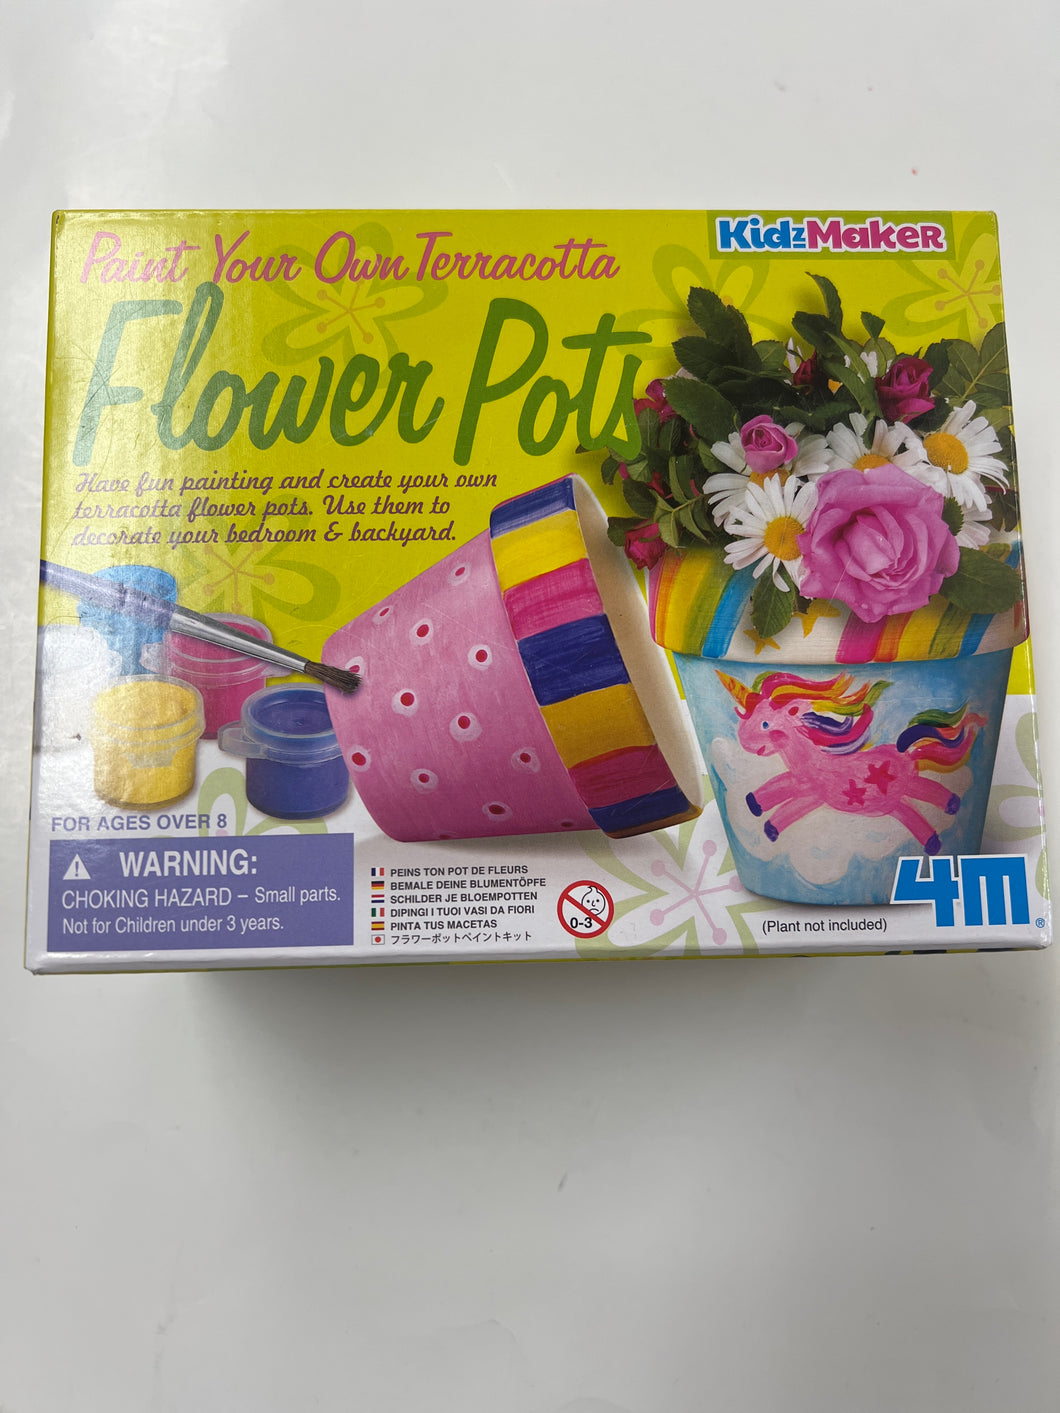 Paint your own terracotta flower pot